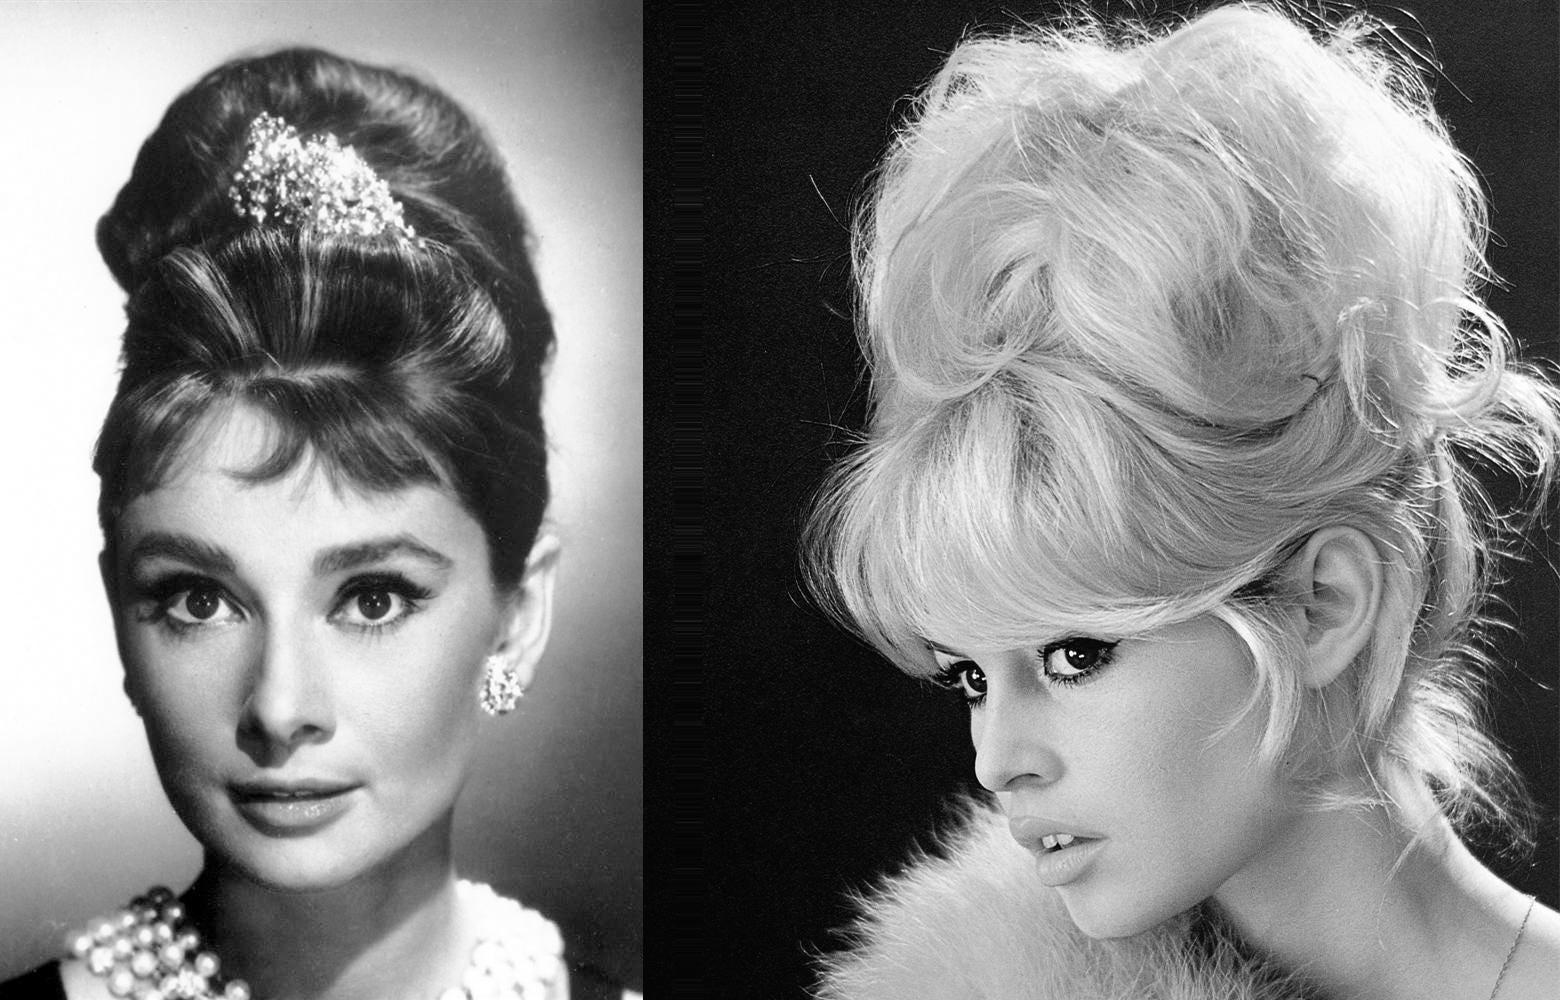 Beehive hairstyle design with Audrey Hepburn and Brigitte Bardot